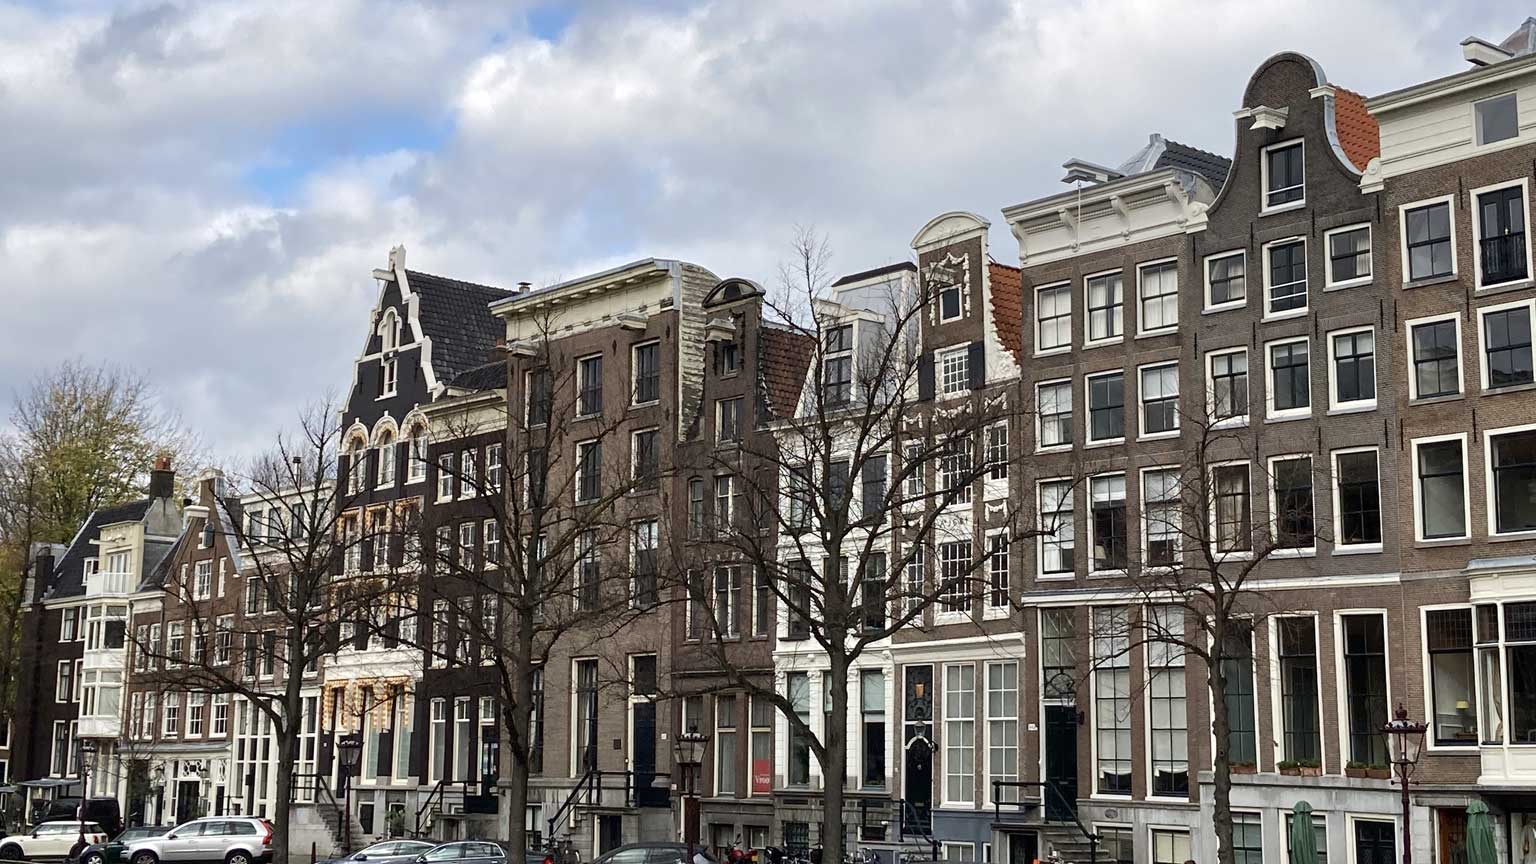 Keizersgracht, Amsterdam, seen from Leidsestraat towards Leidsegracht